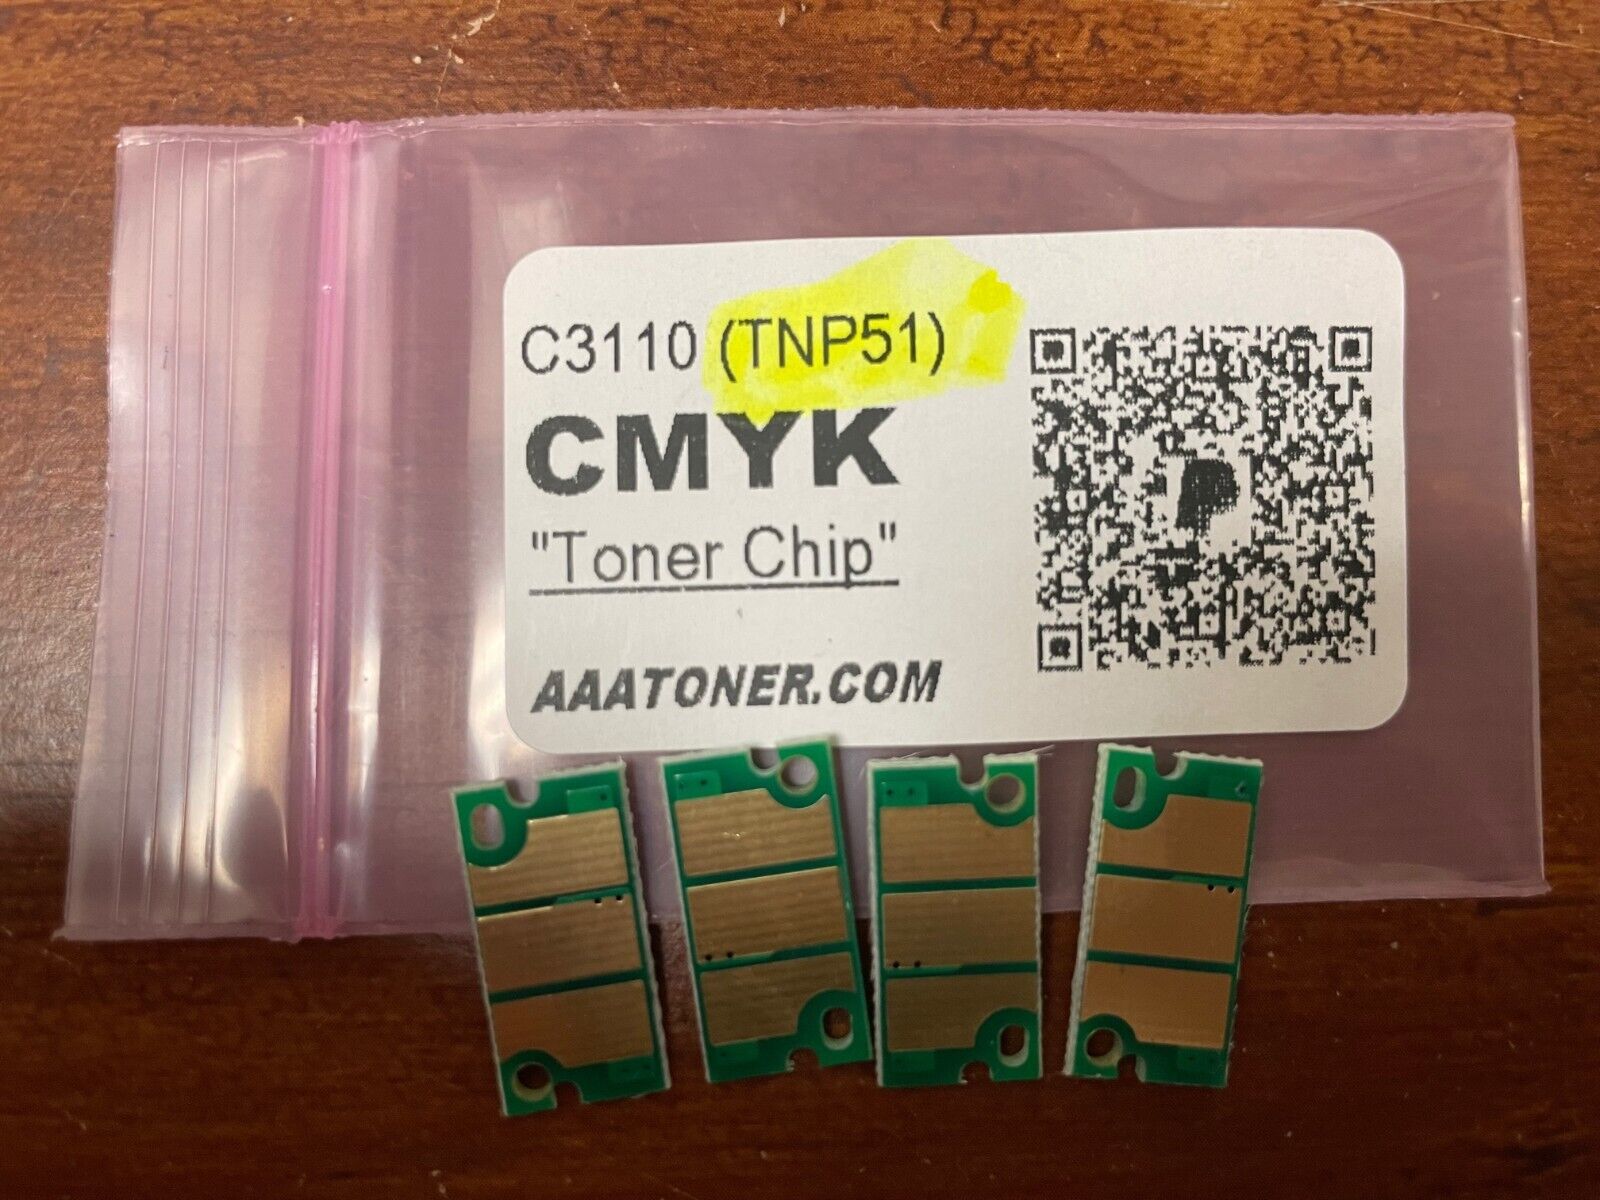 4 x Toner Chip for Konica Minolta Bizhub C3110 (TNP51) Refill